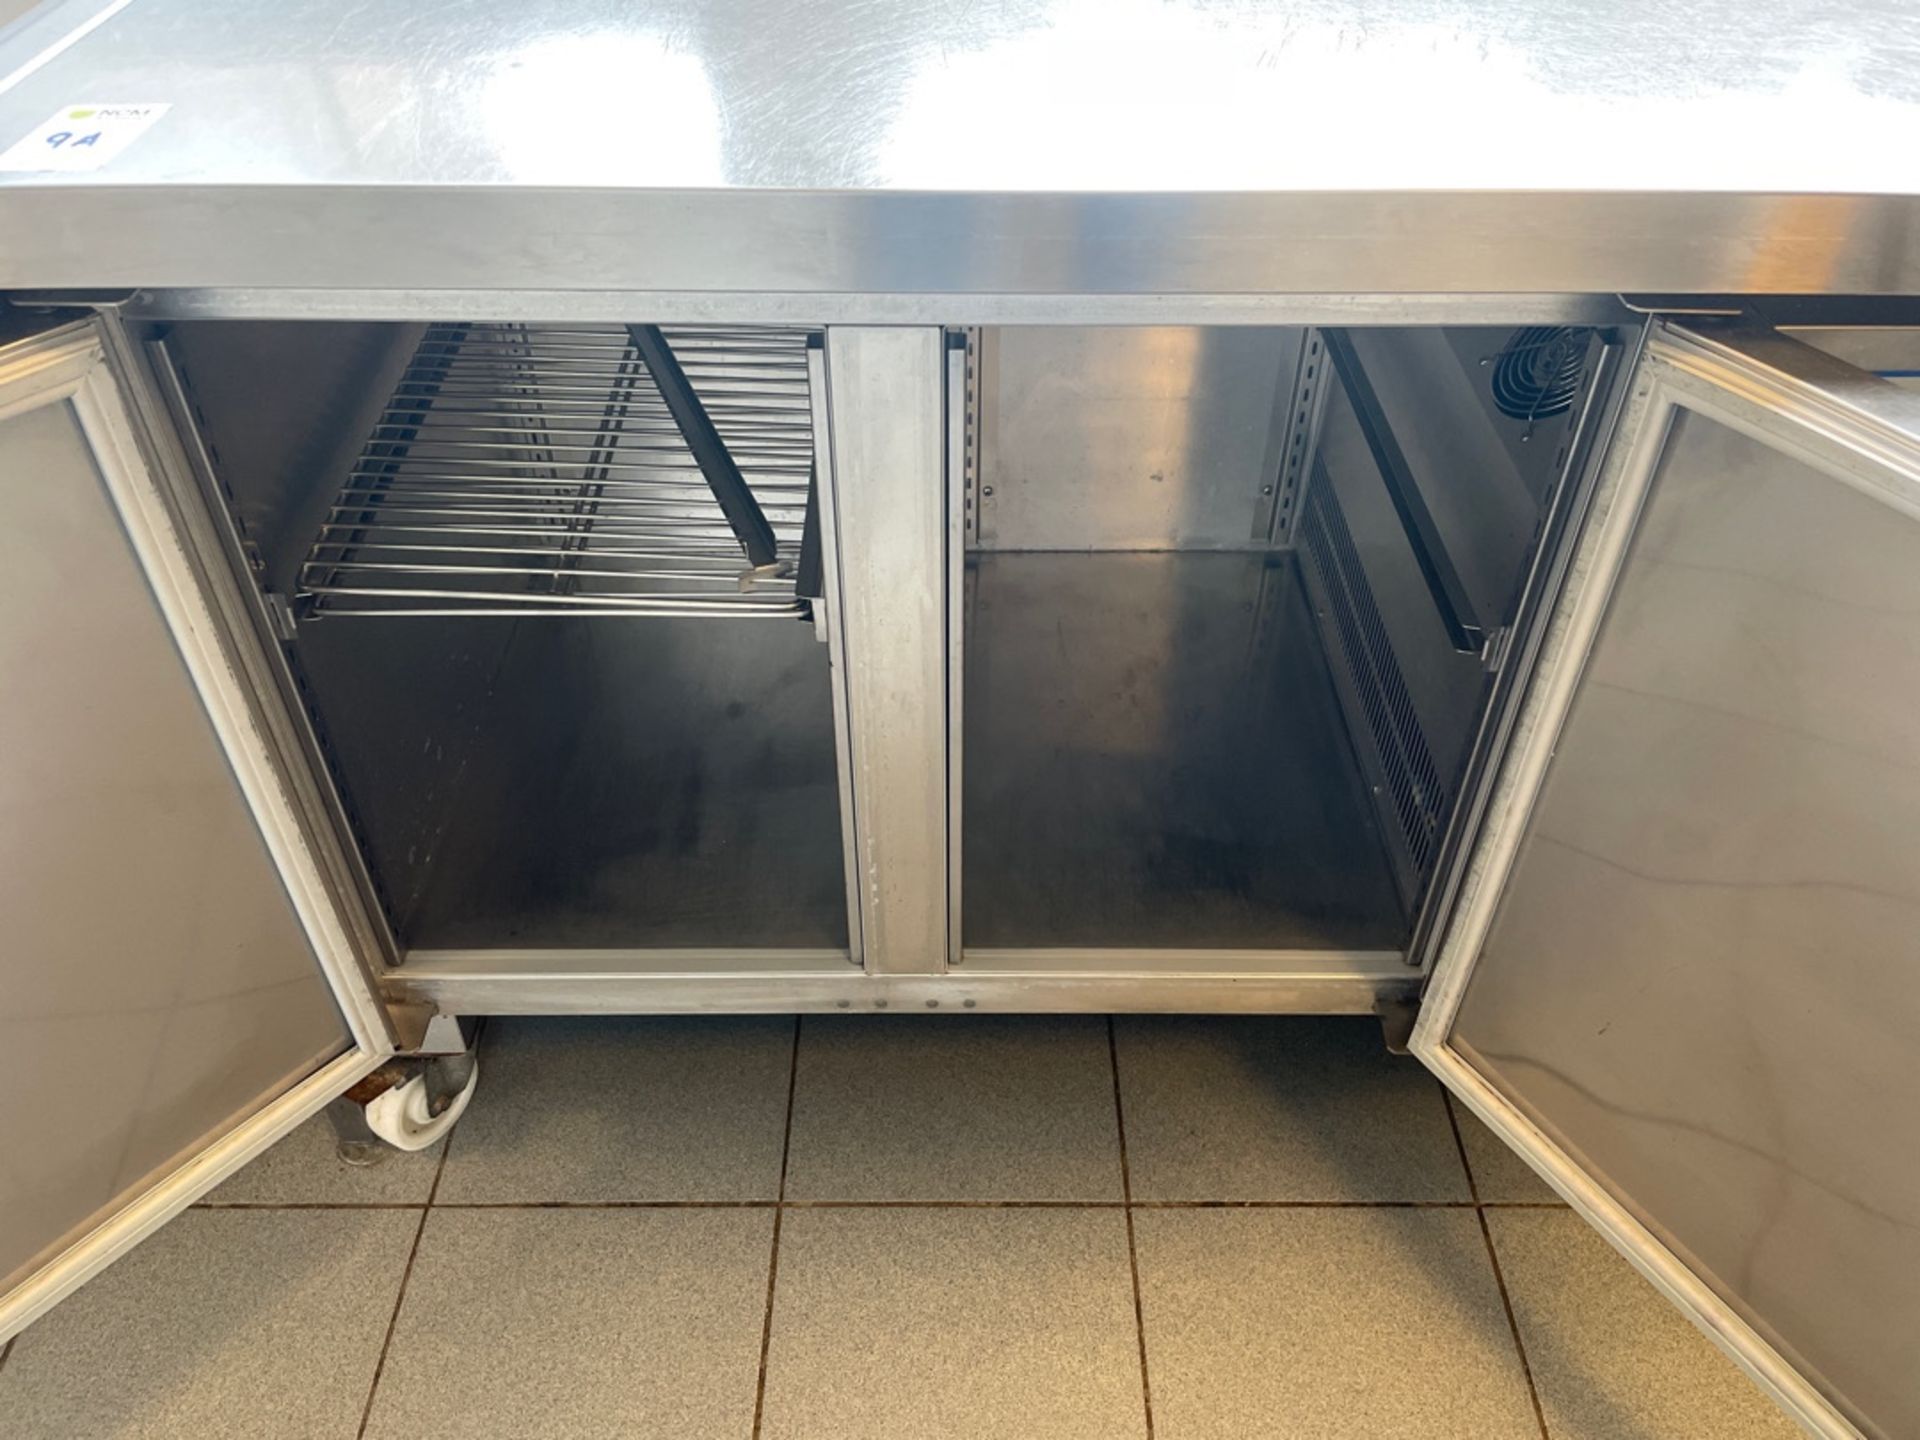 Gram KB 1807 SE B Bench Style Refrigerator - Image 2 of 6